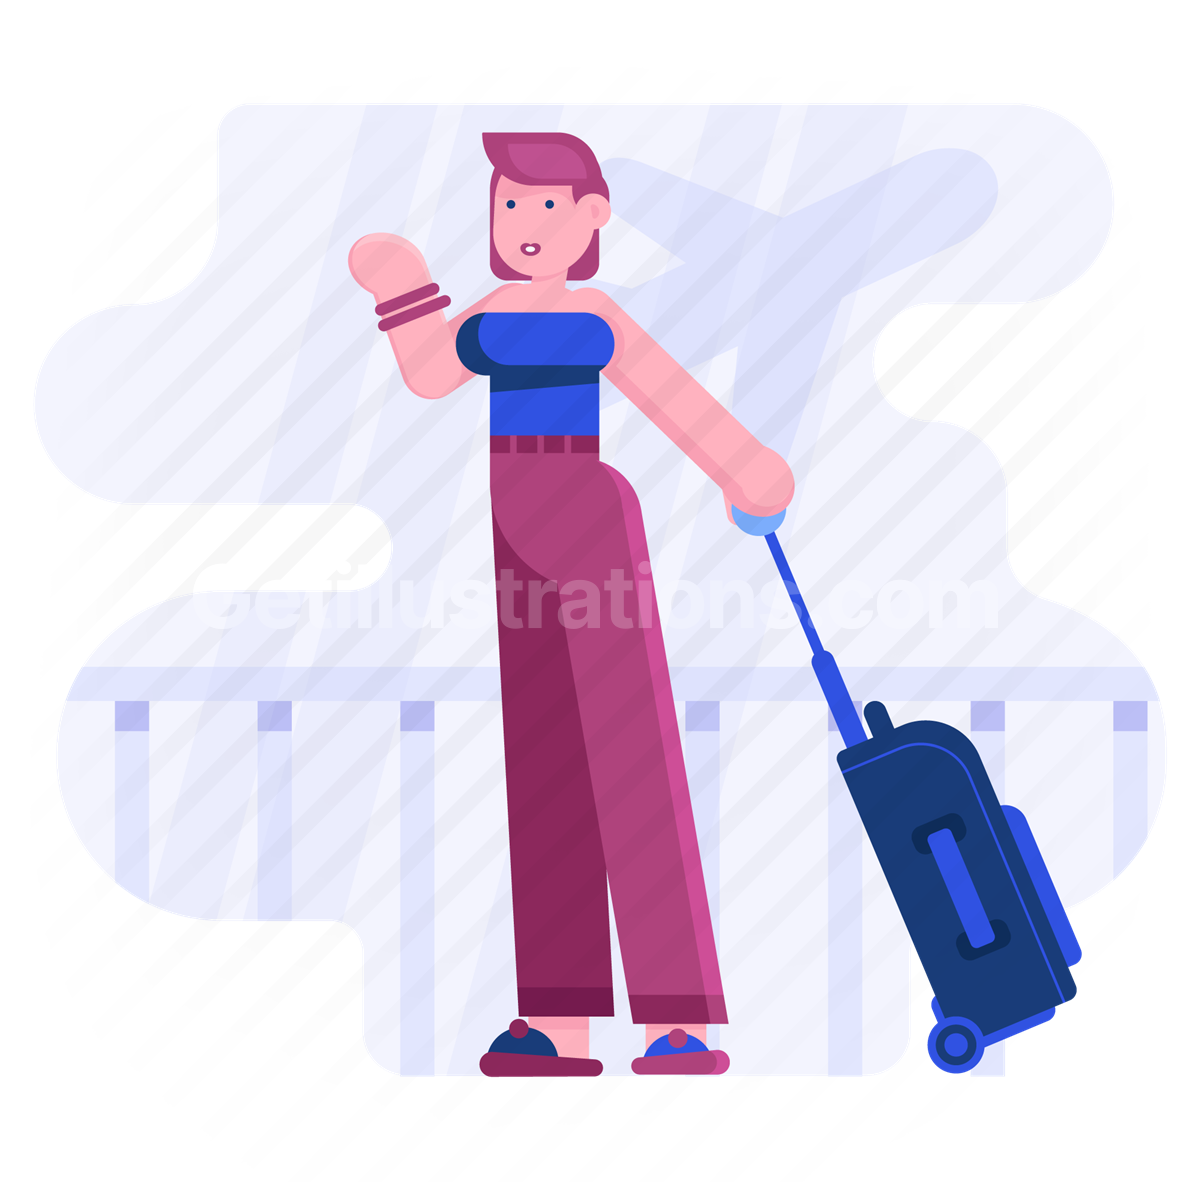 travelling, airport, flight, airplane, luggage, baggage, people